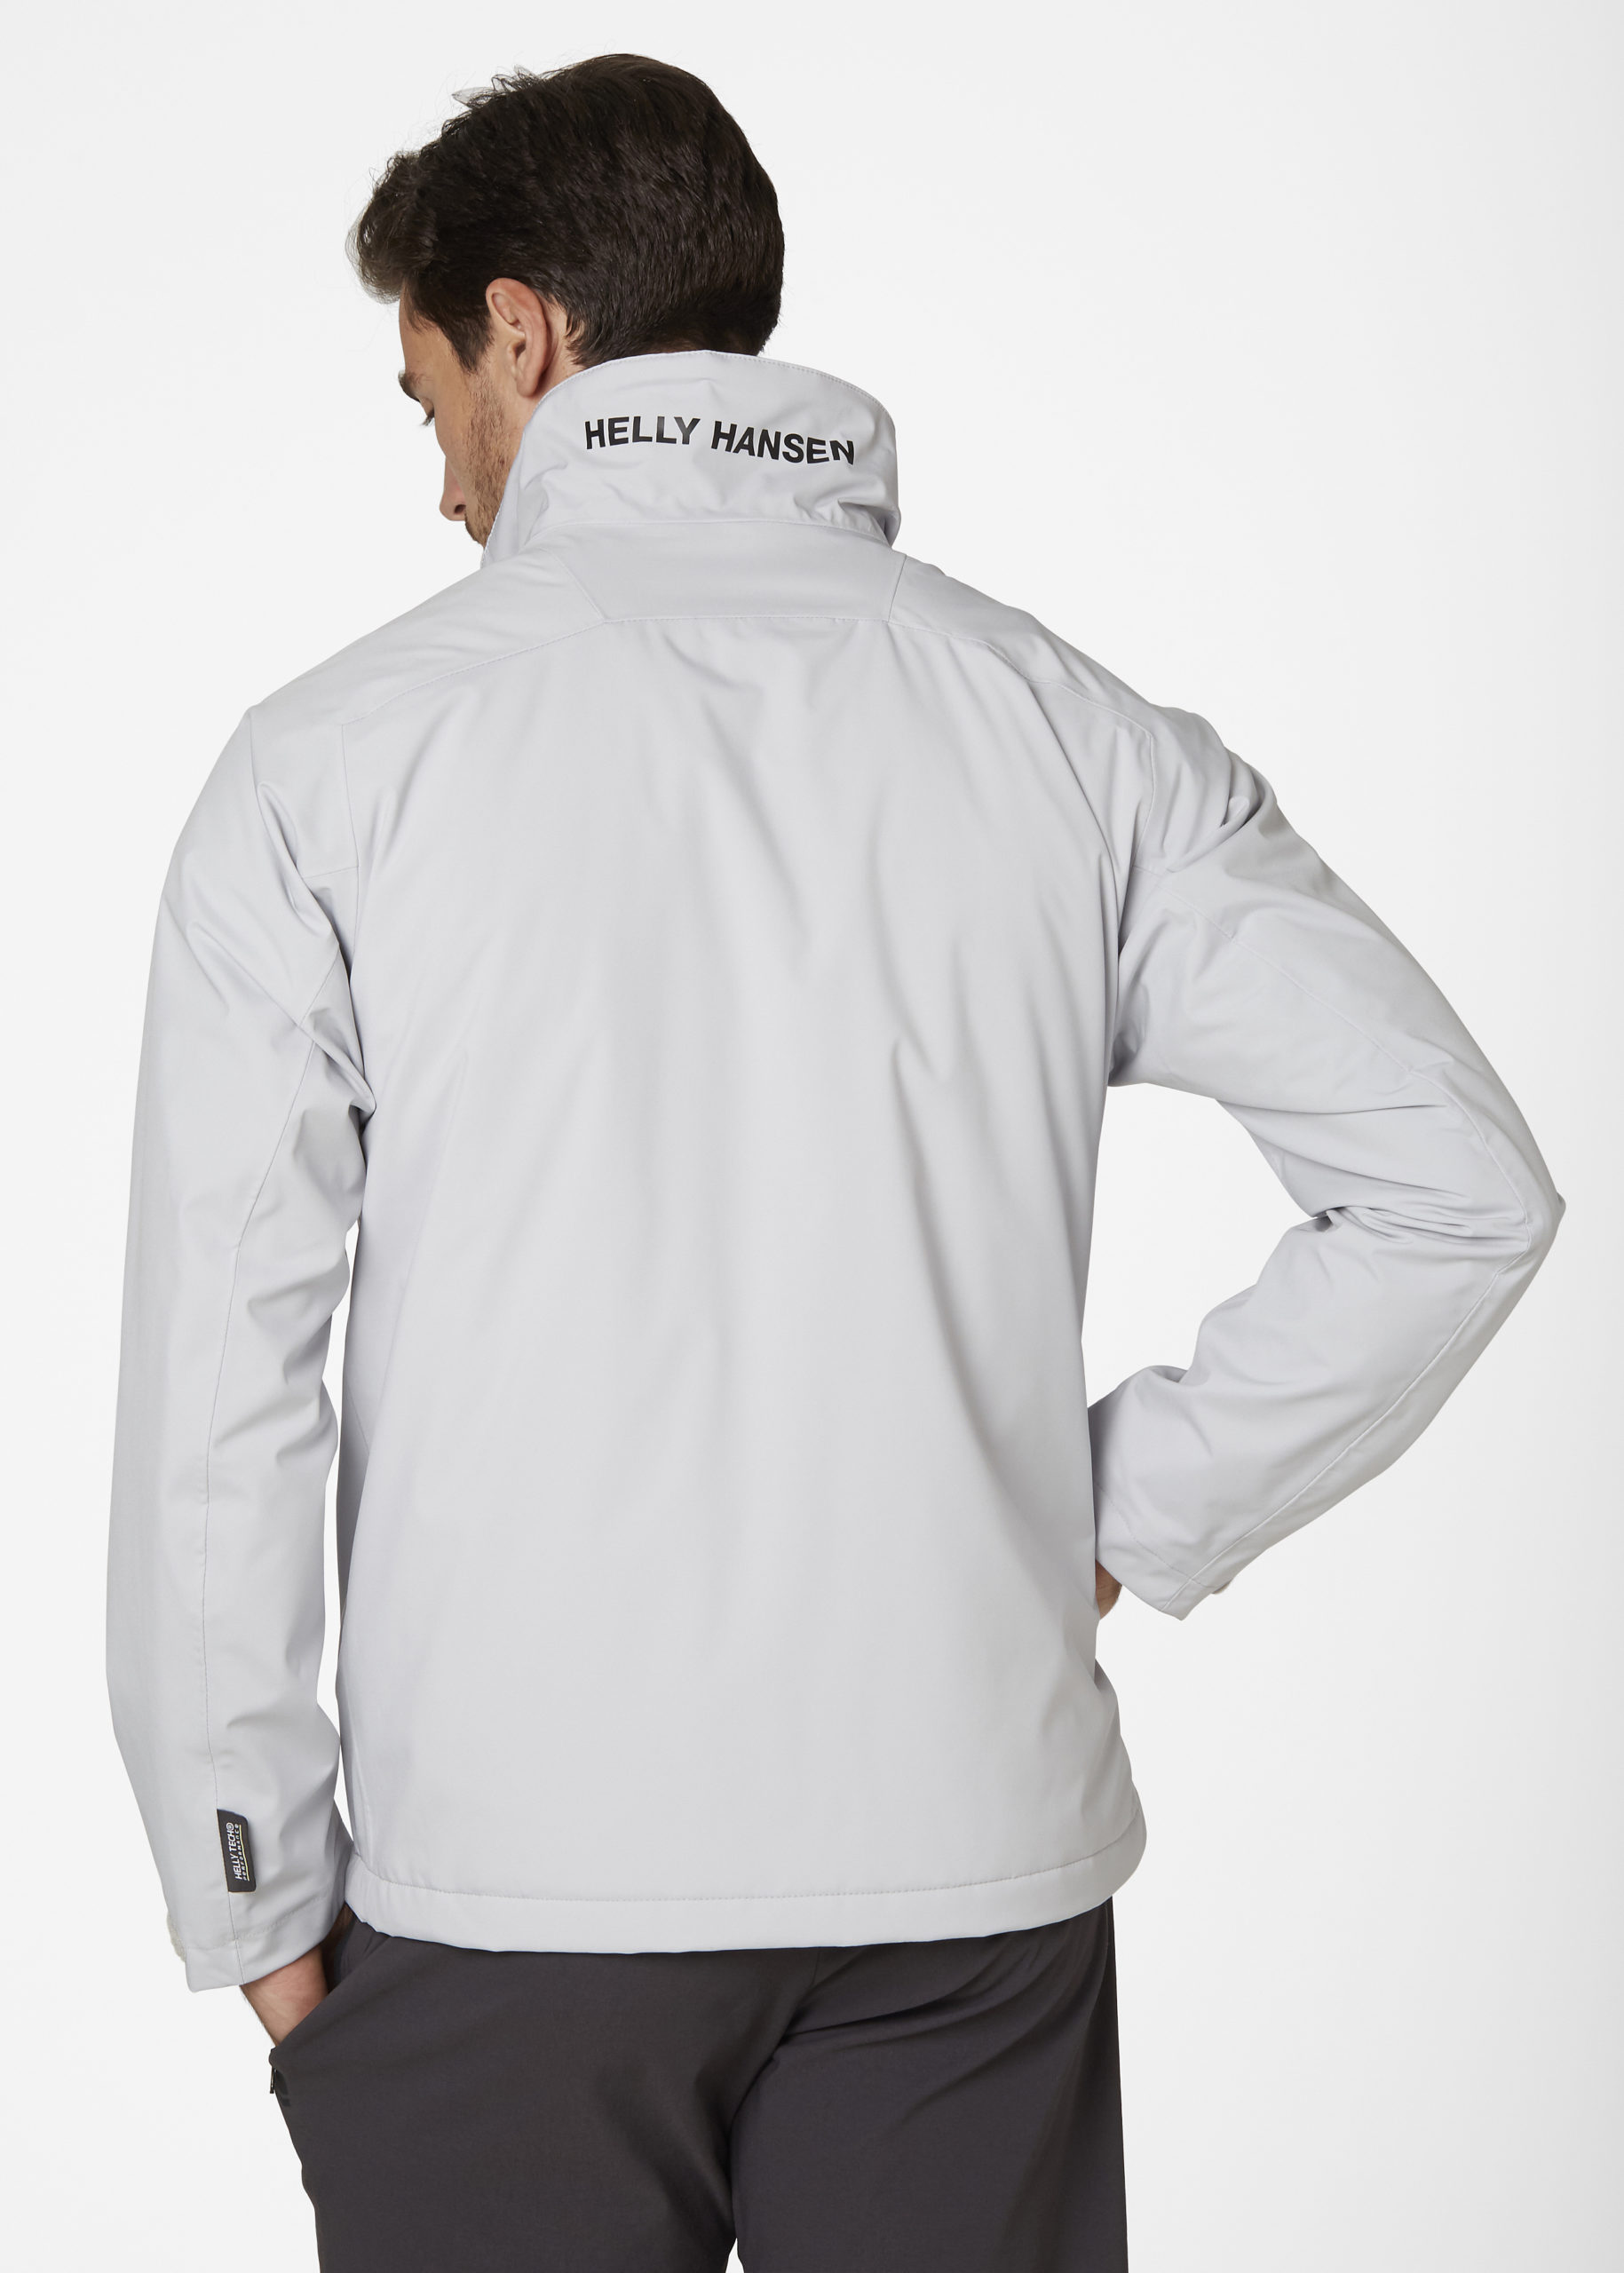 Helly Hansen Hydropower Racing Midlayer Waterproof Breathable Insulated Marine Design Jacket 